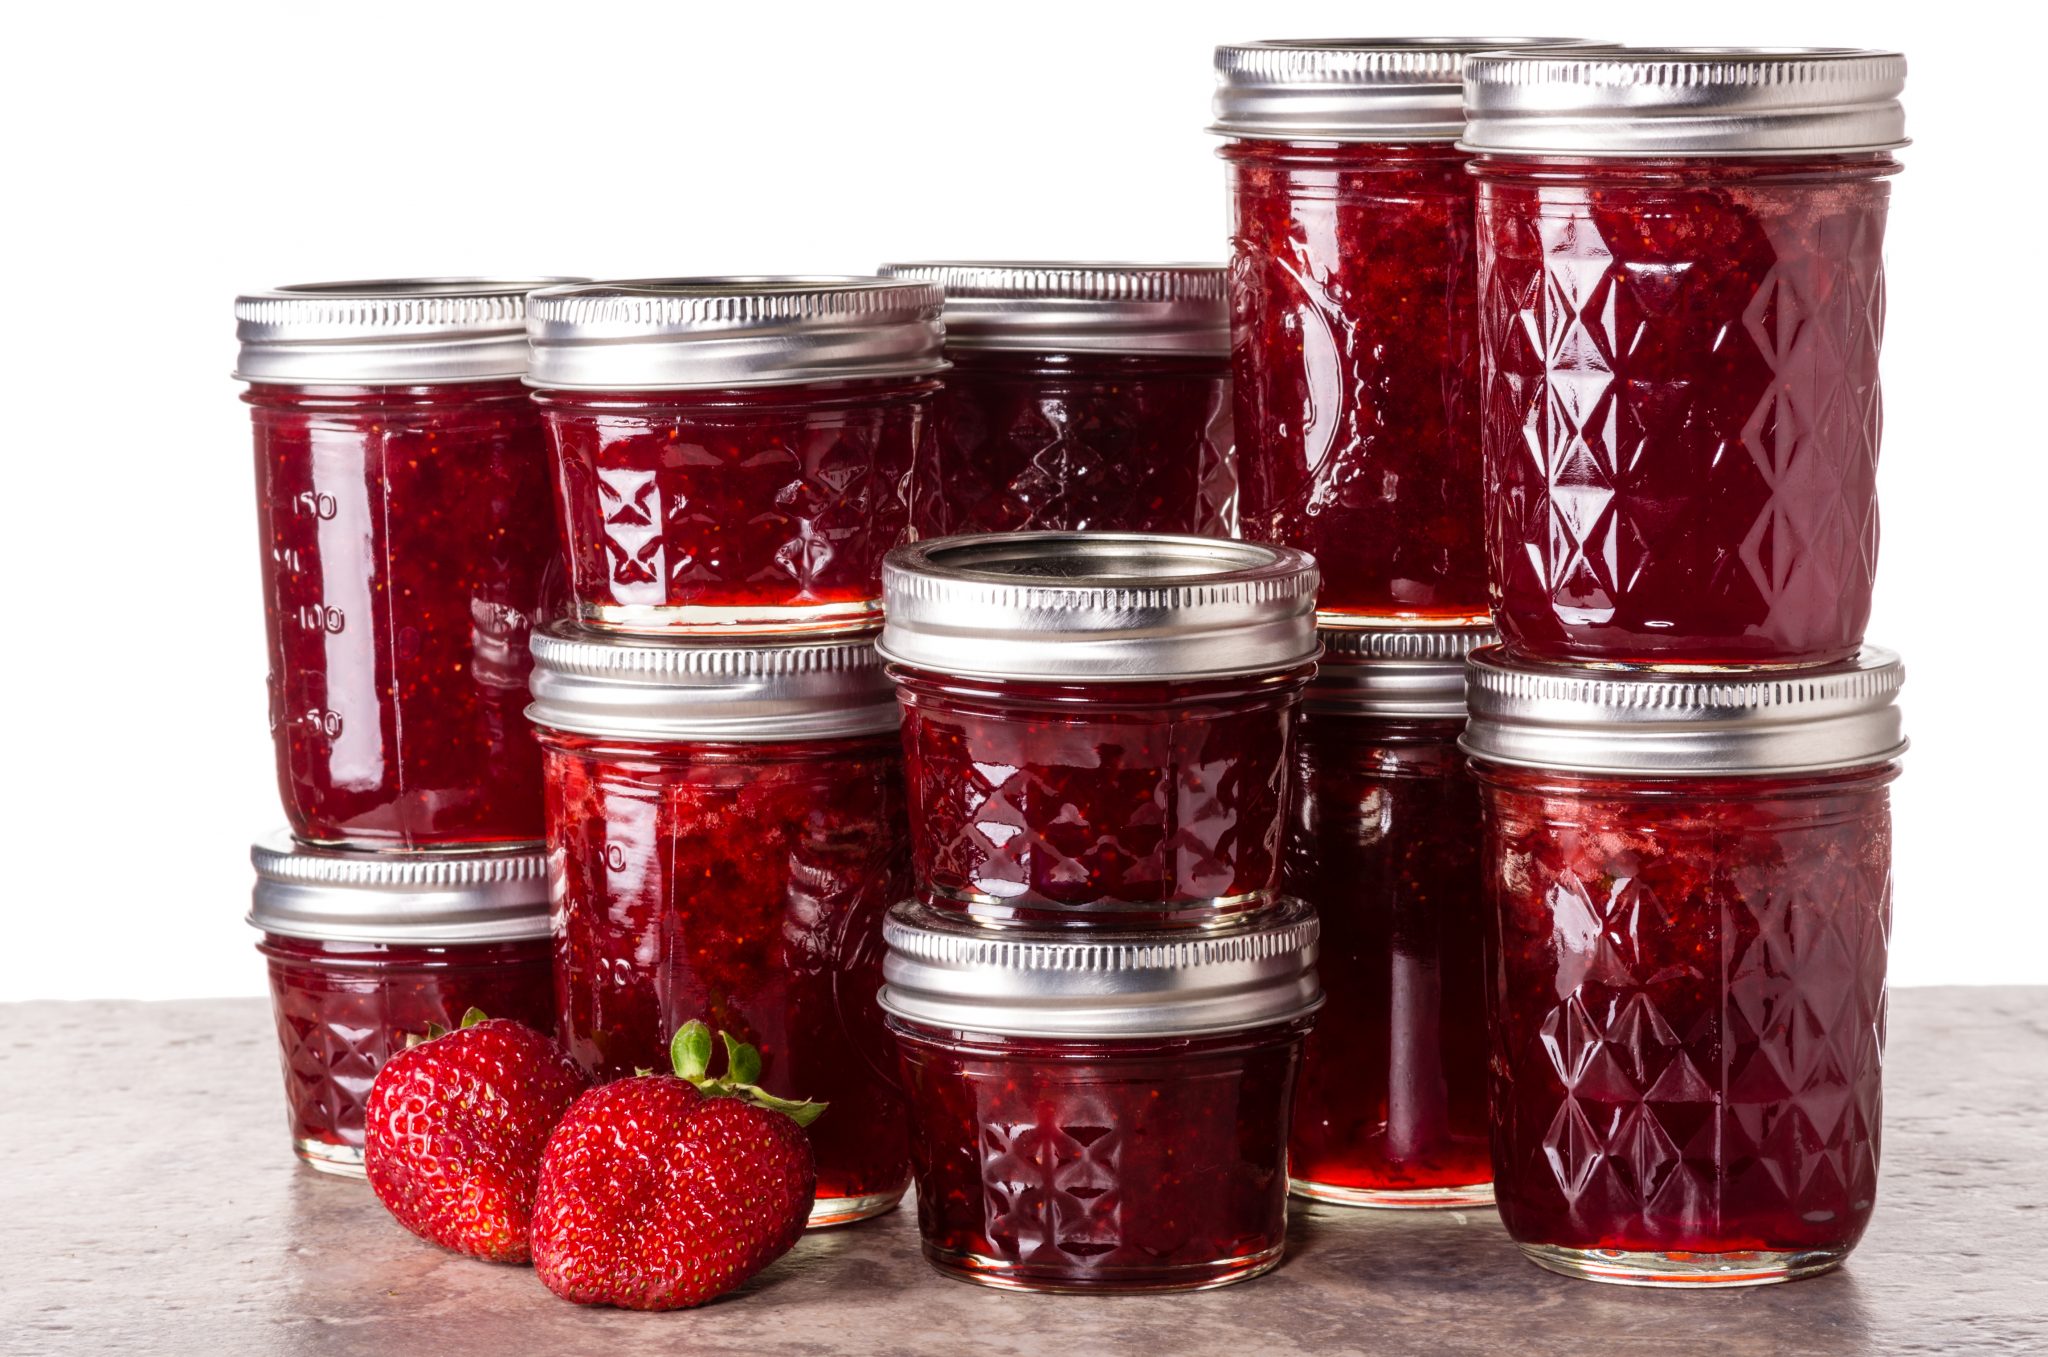 homemade jams and jellies